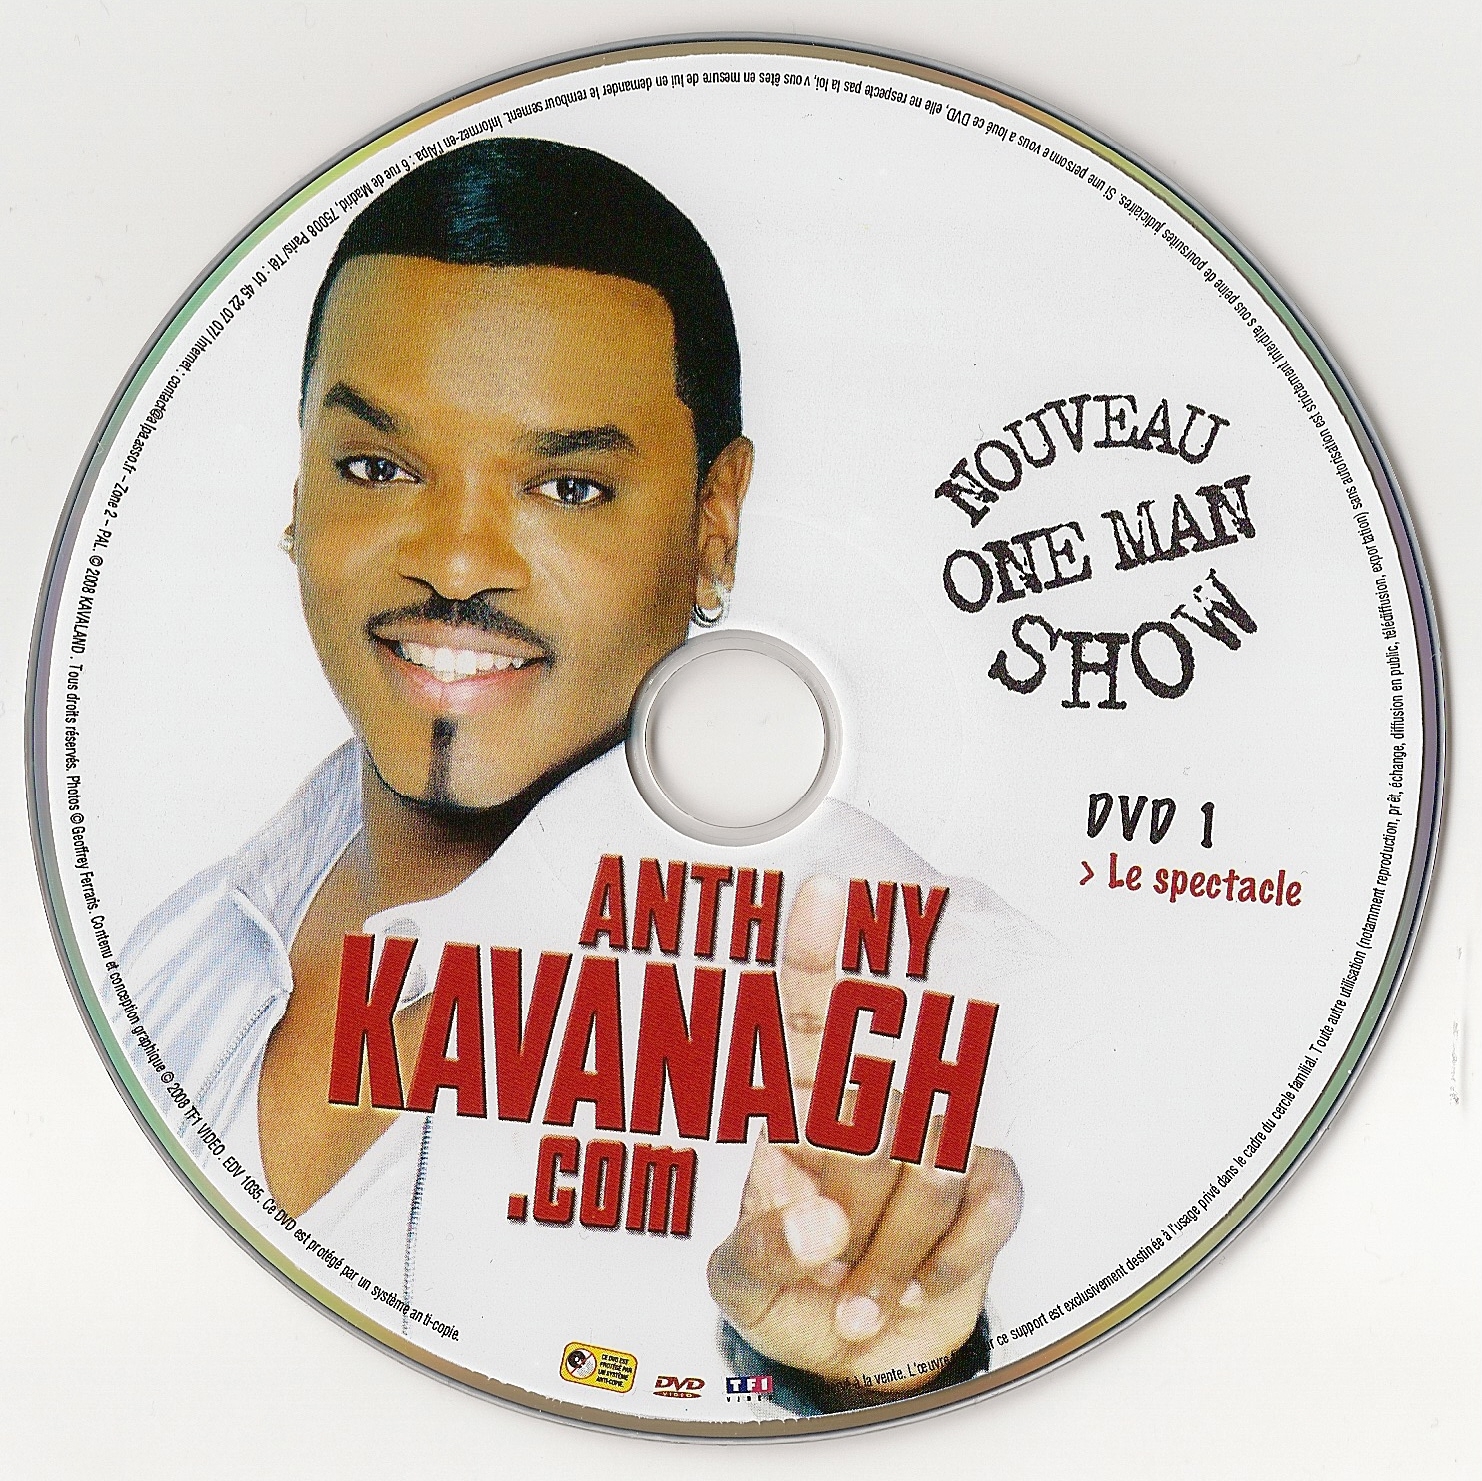 Anthony Kavanagh point com DVD 1